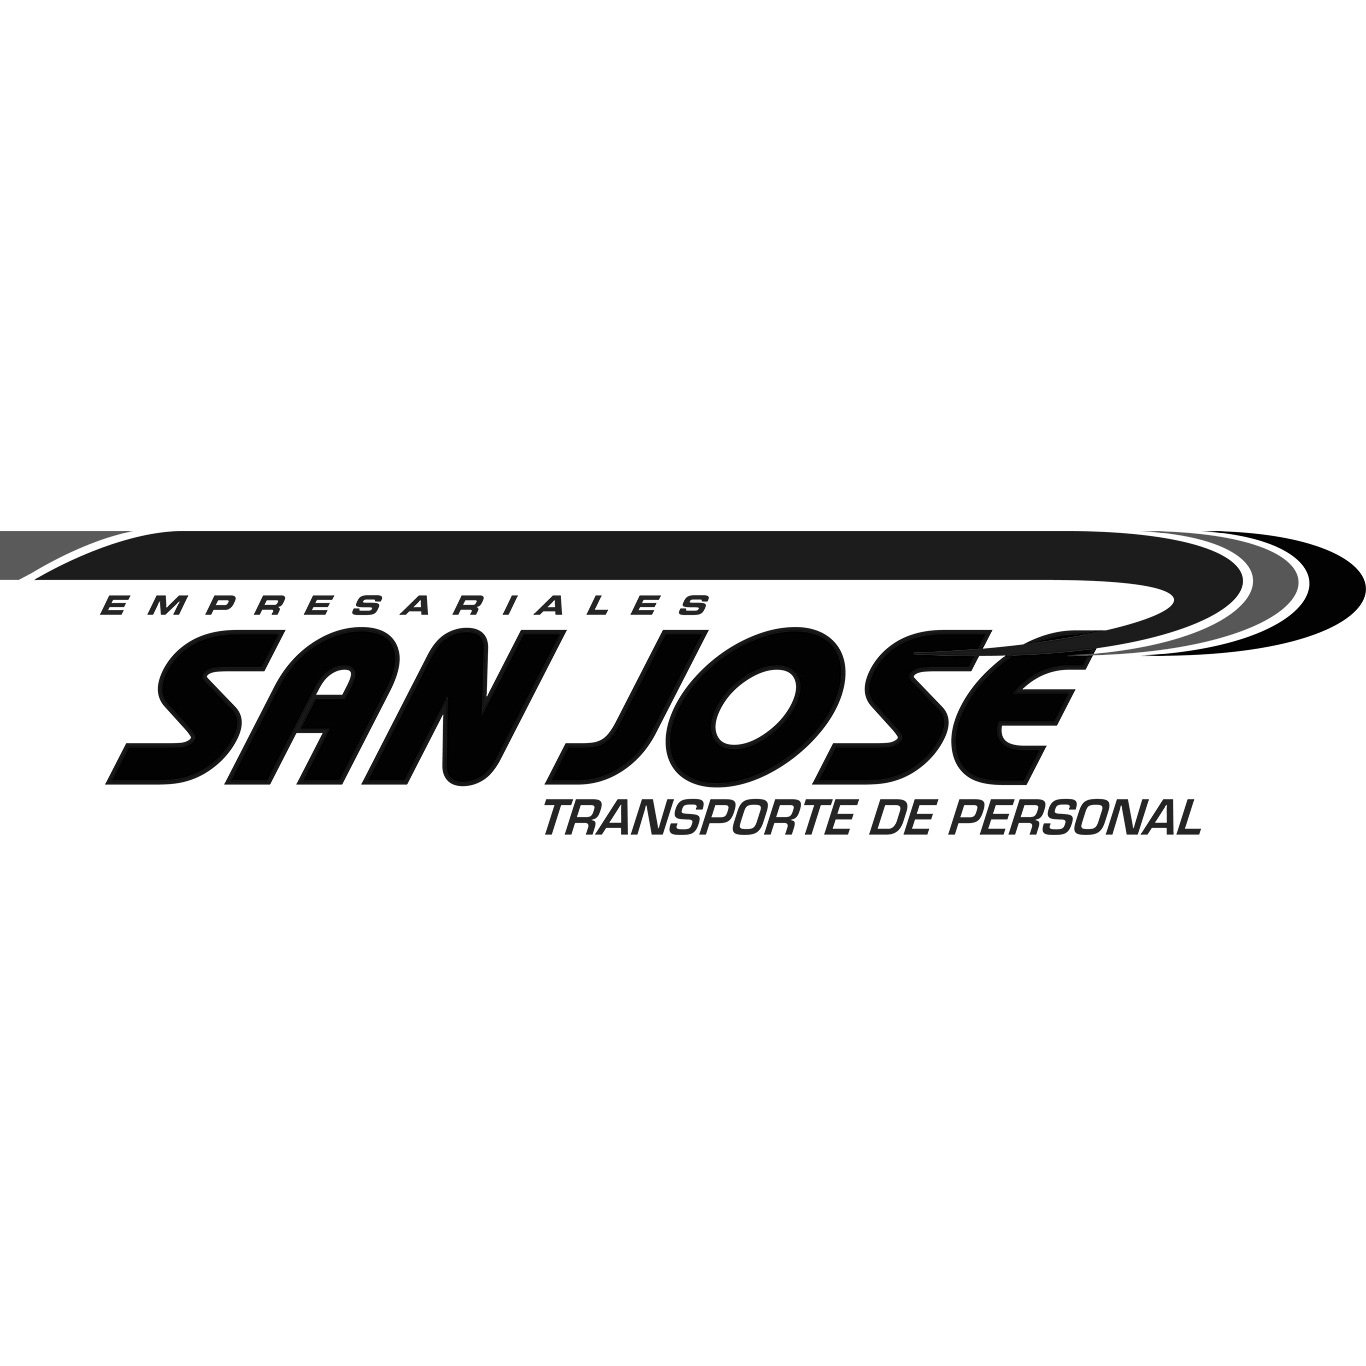 Transportes San José